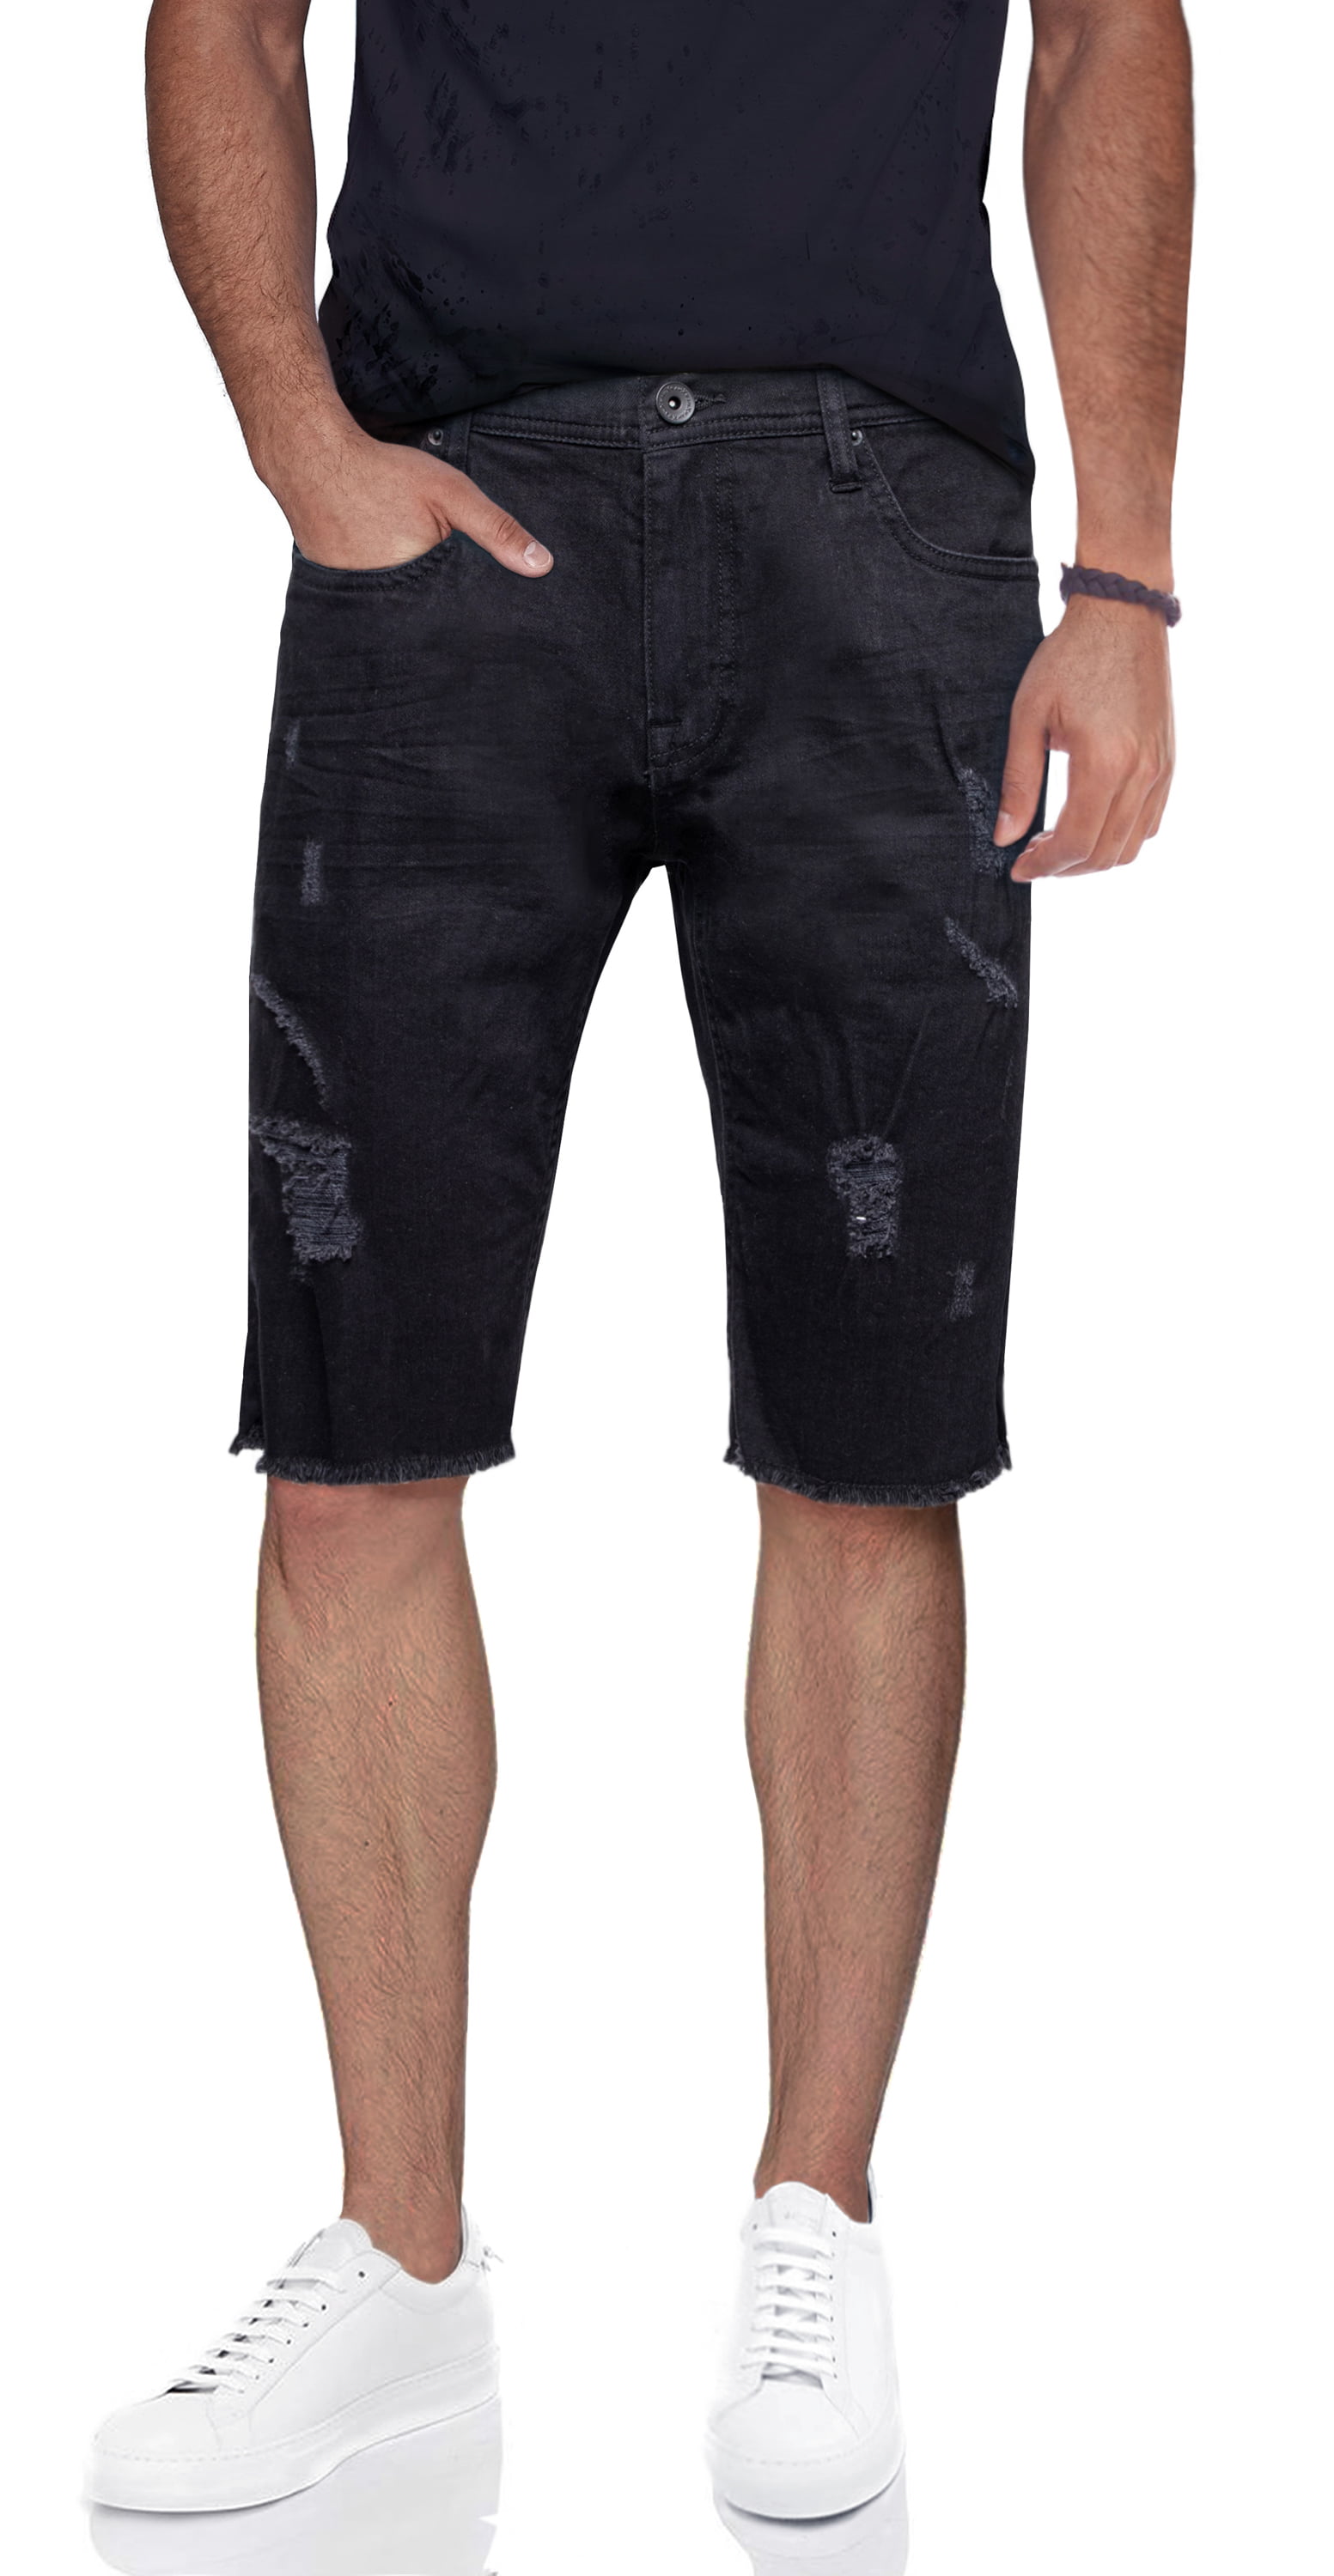 X RAY Jean Shorts for Men Distressed Cutoff Taper Casual Flex Comfort Mens Denim Shorts 